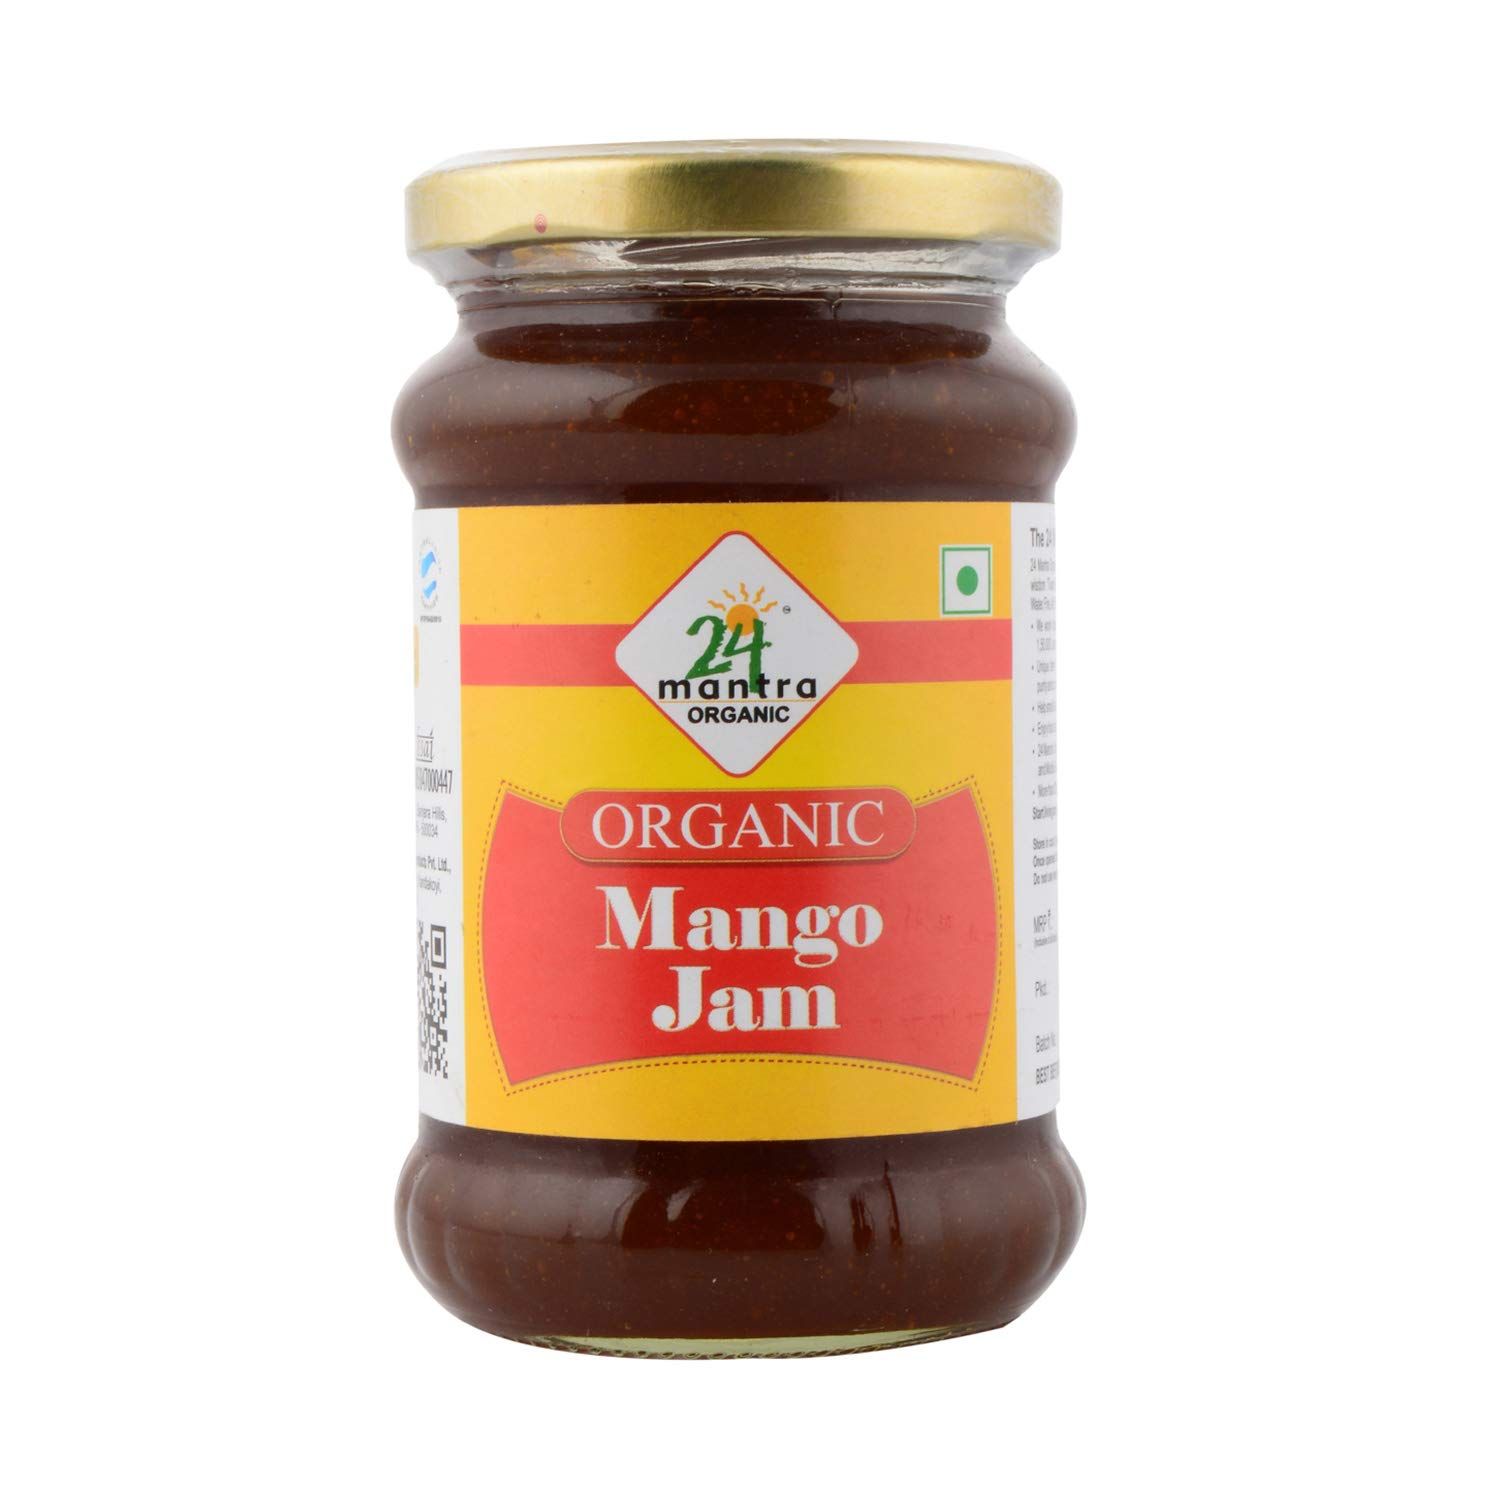 24 Mantra Organic Mango Jam Image